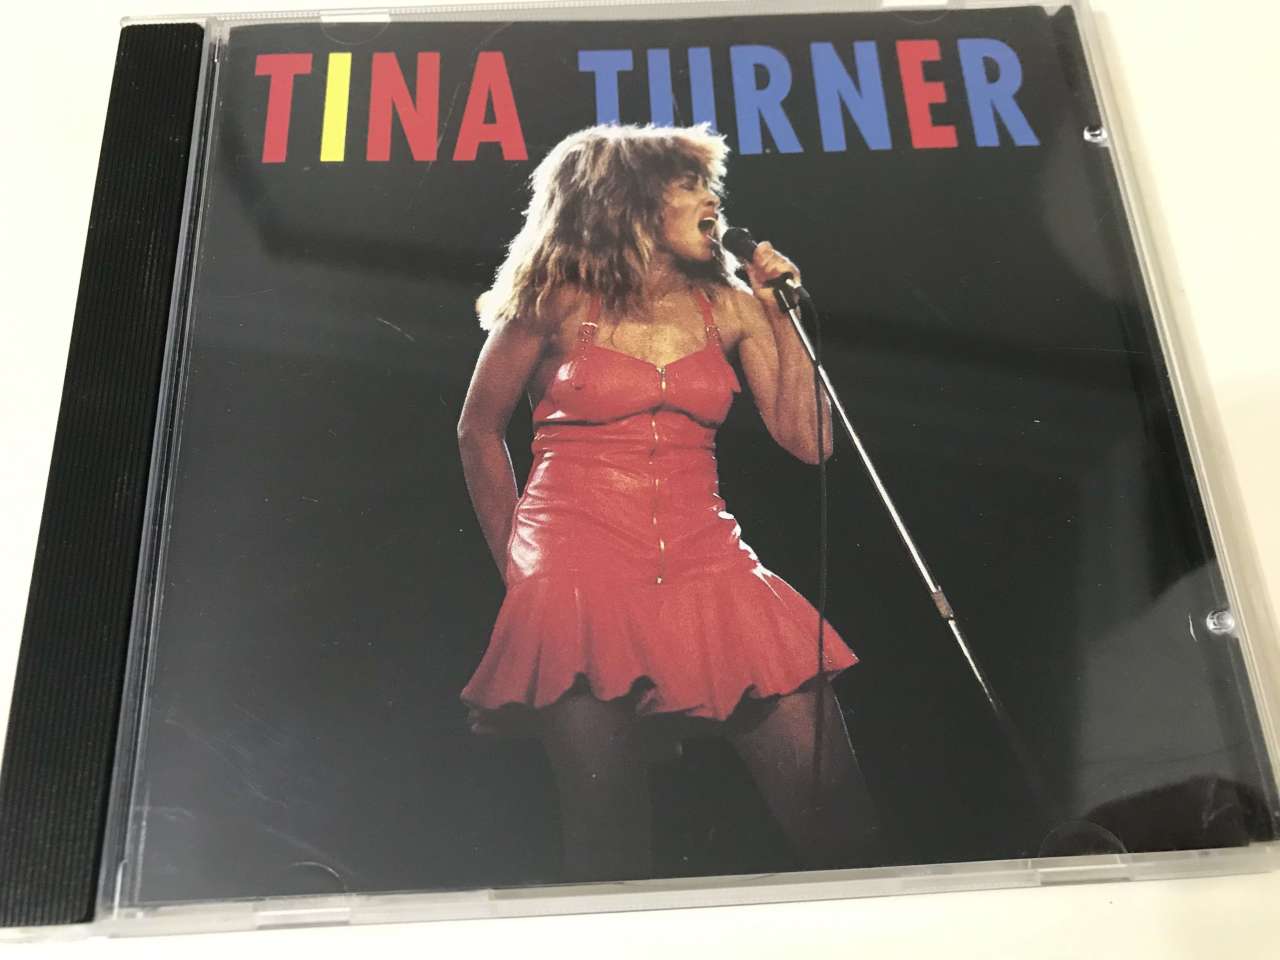 Tina Turner Tina Turner Plak Cd Dvd Satın Al